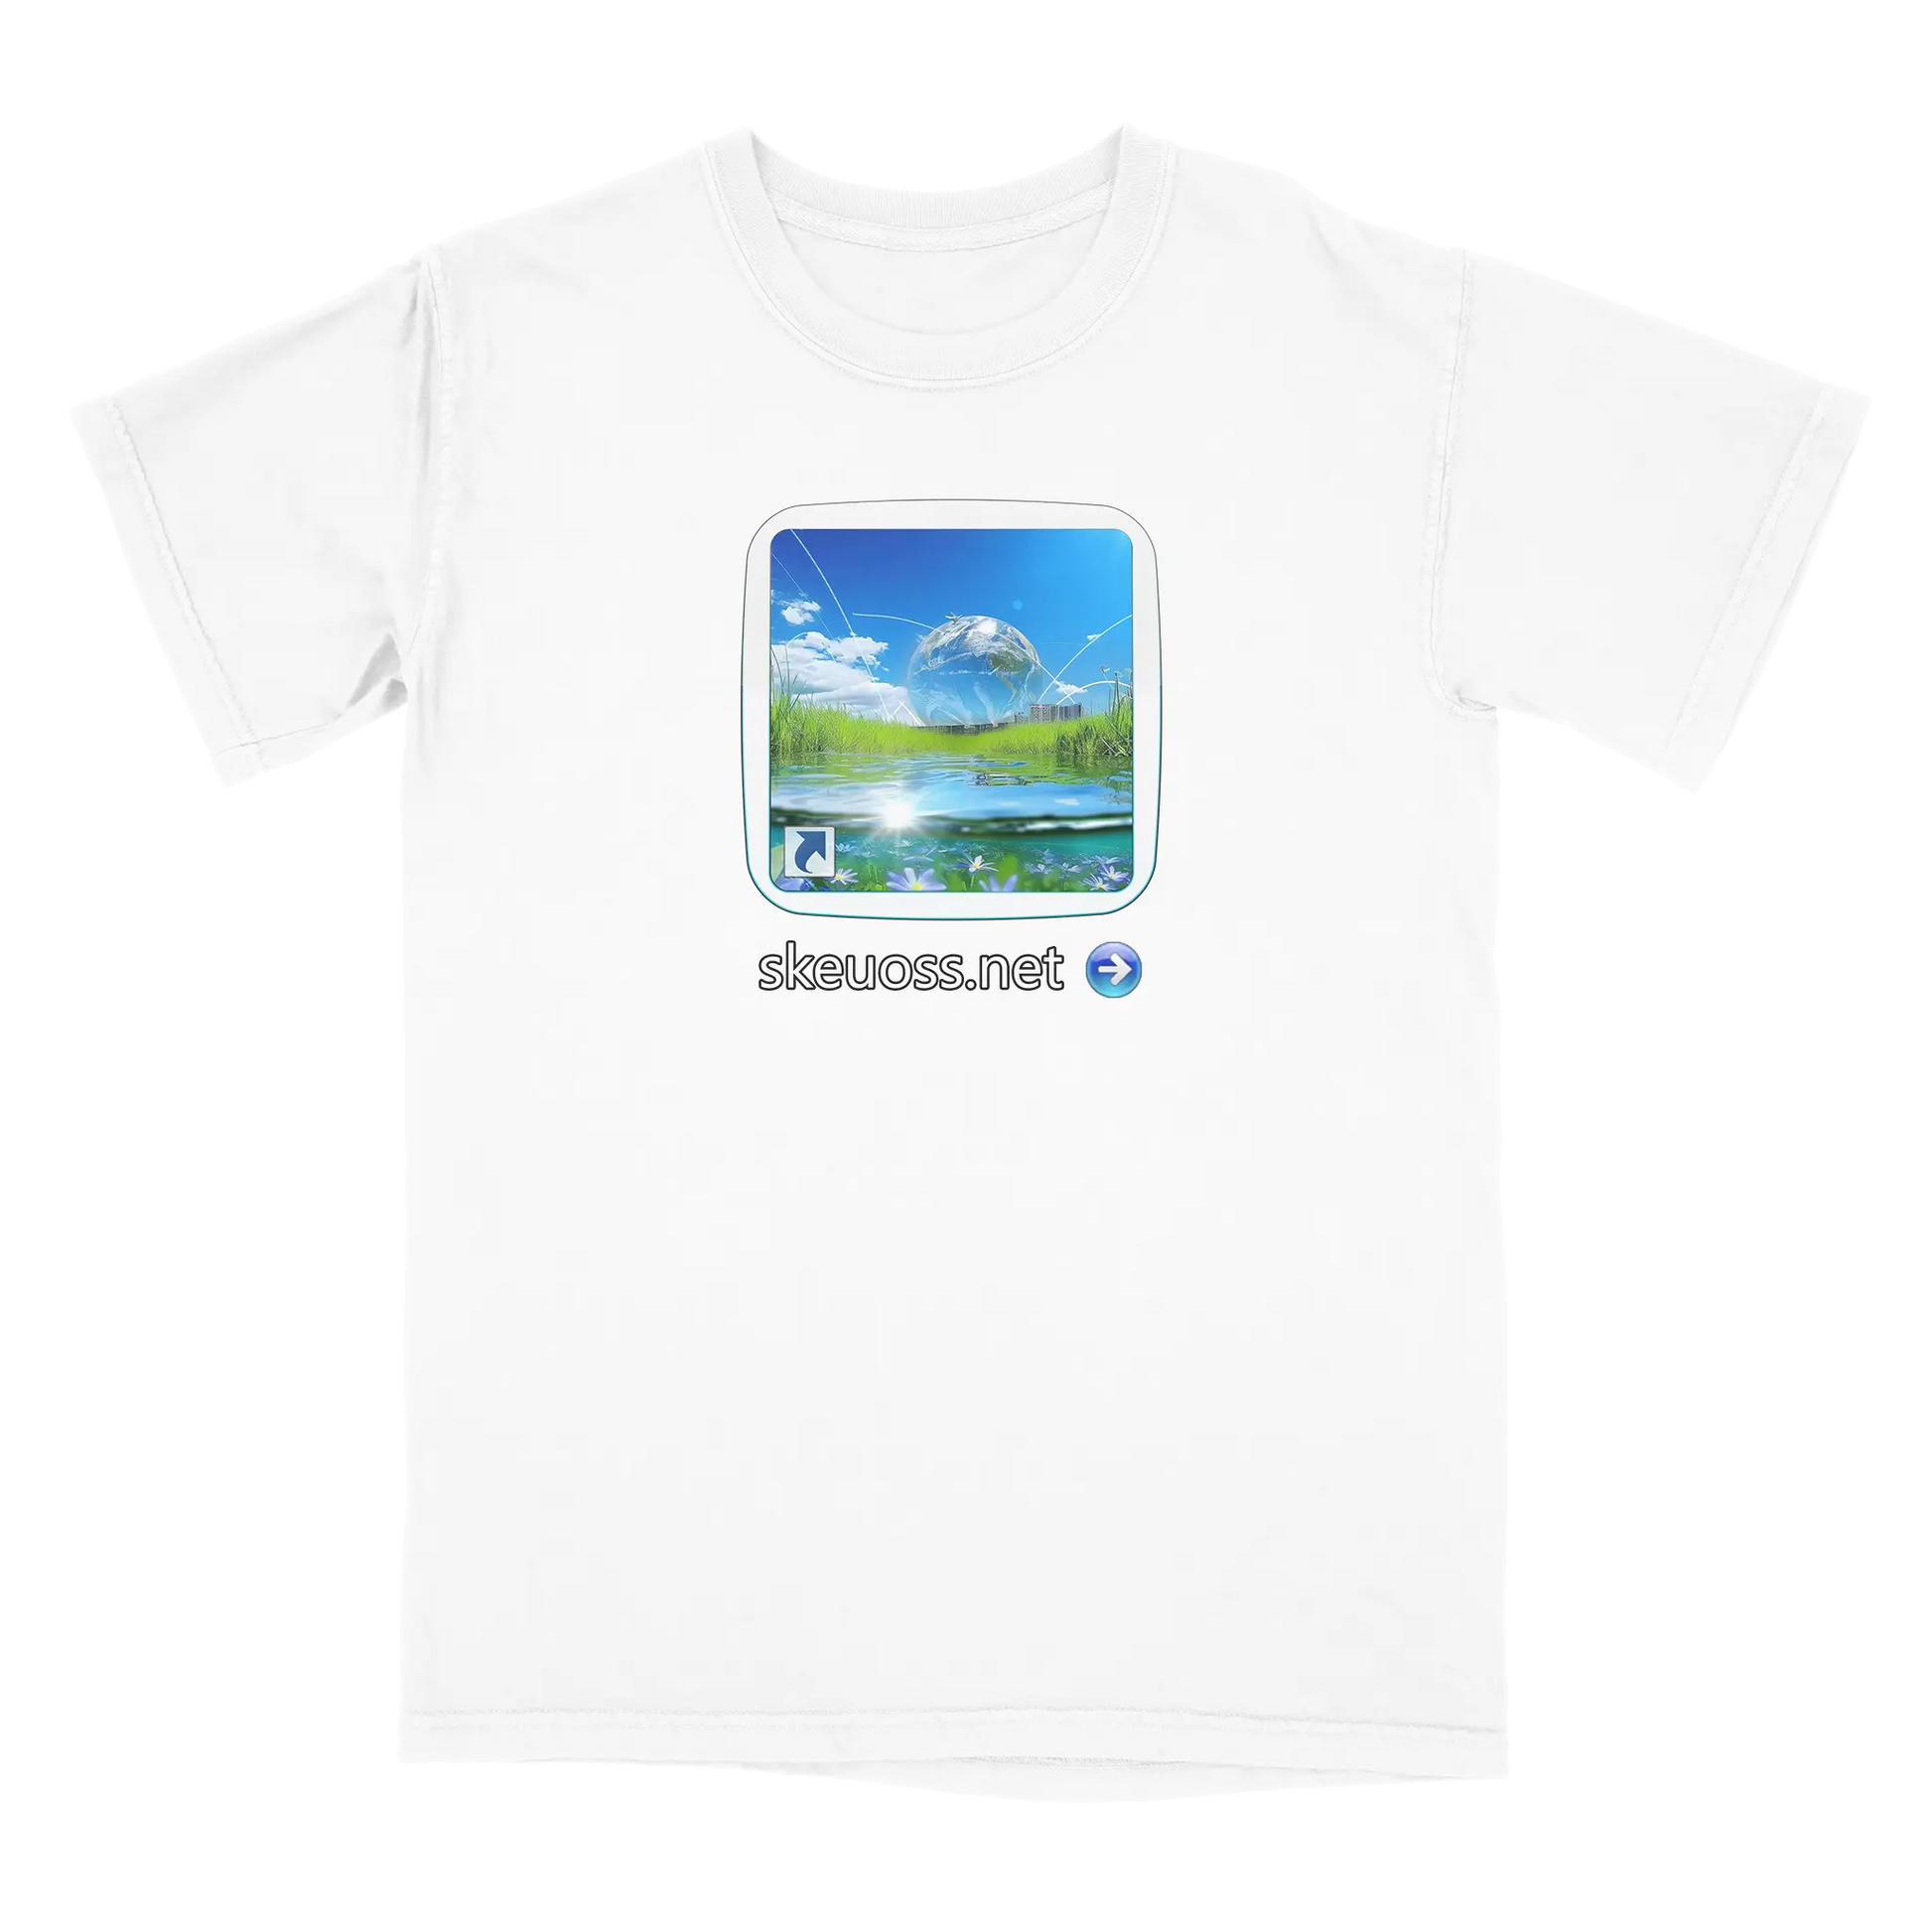 Frutiger Aero T-shirt - User Login Collection - User 342